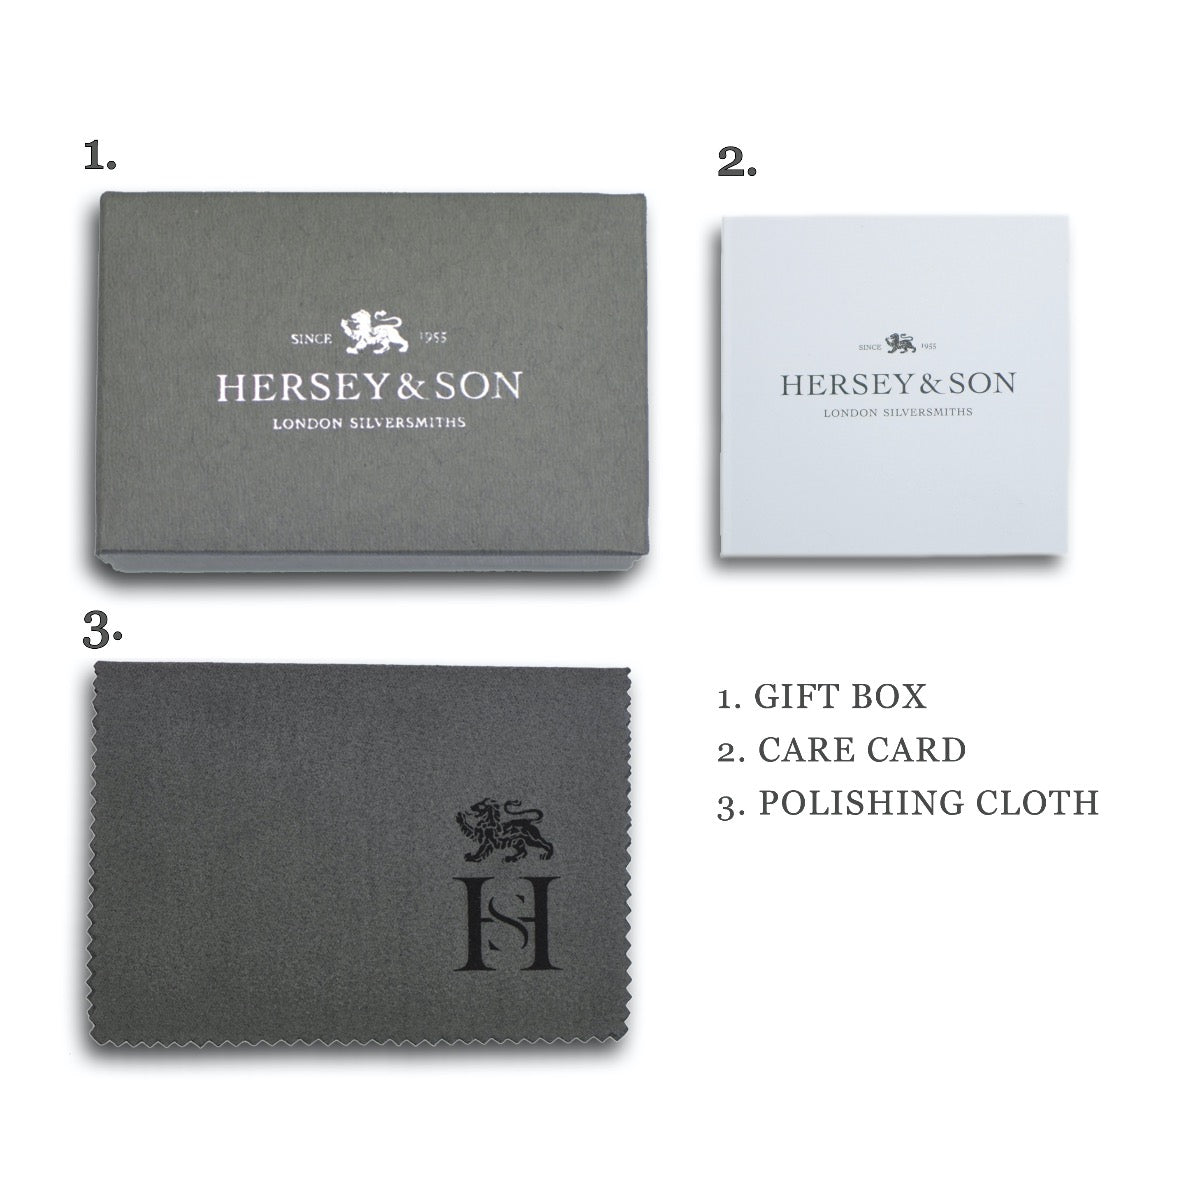 Hersey & Son Silversmiths Packaging Knot silver cufflinks